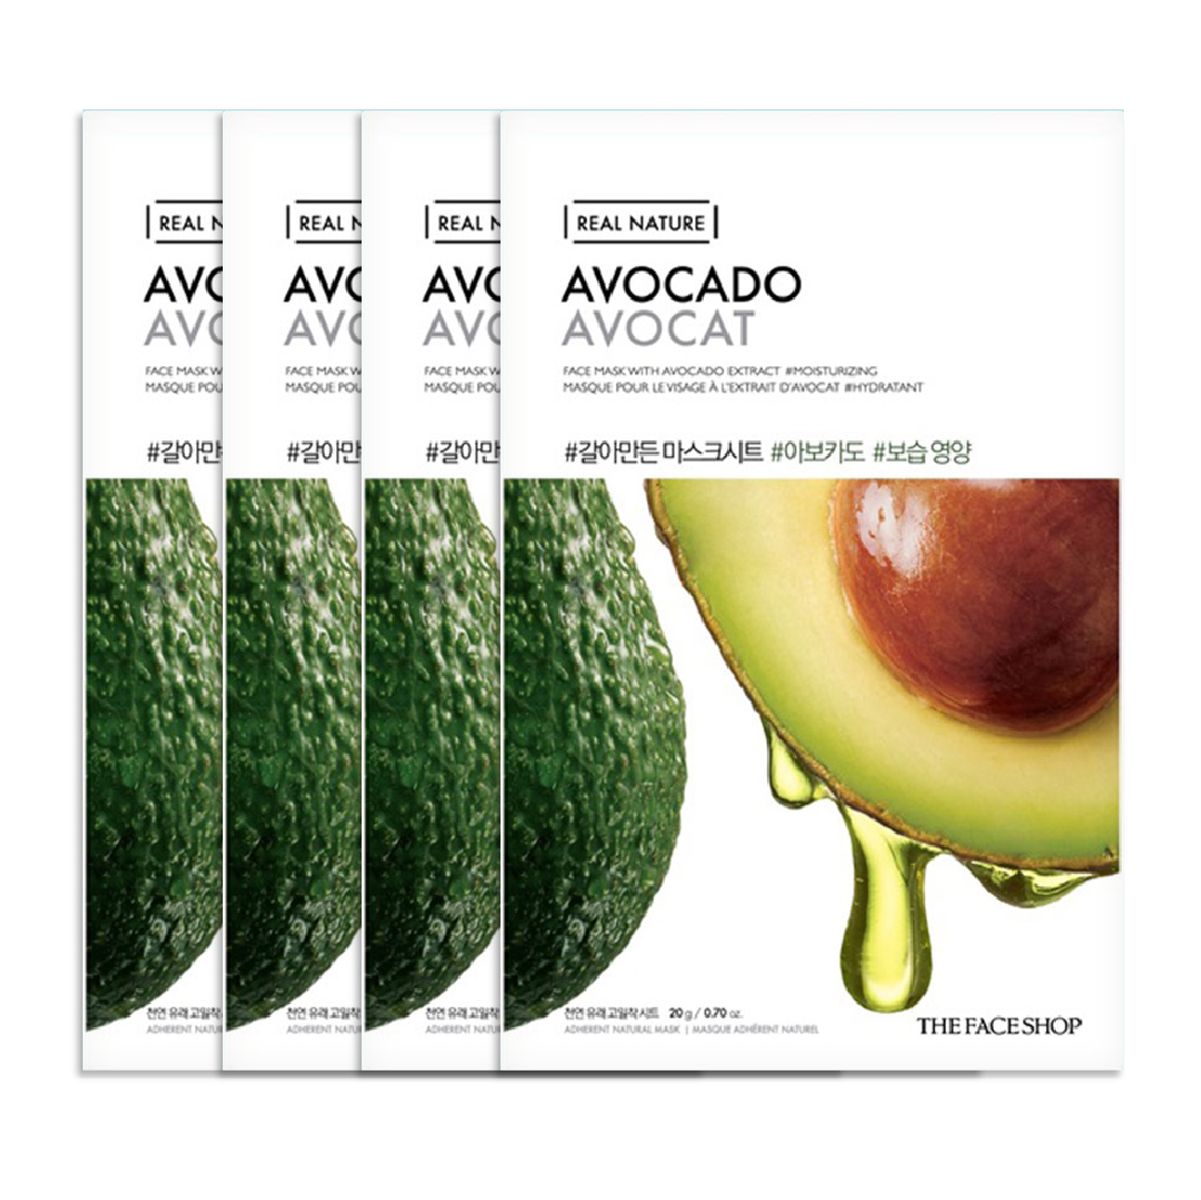 gift-4-mat-na-giay-phuc-hoi-am-toi-uu-thefaceshop-real-nature-avocado-1